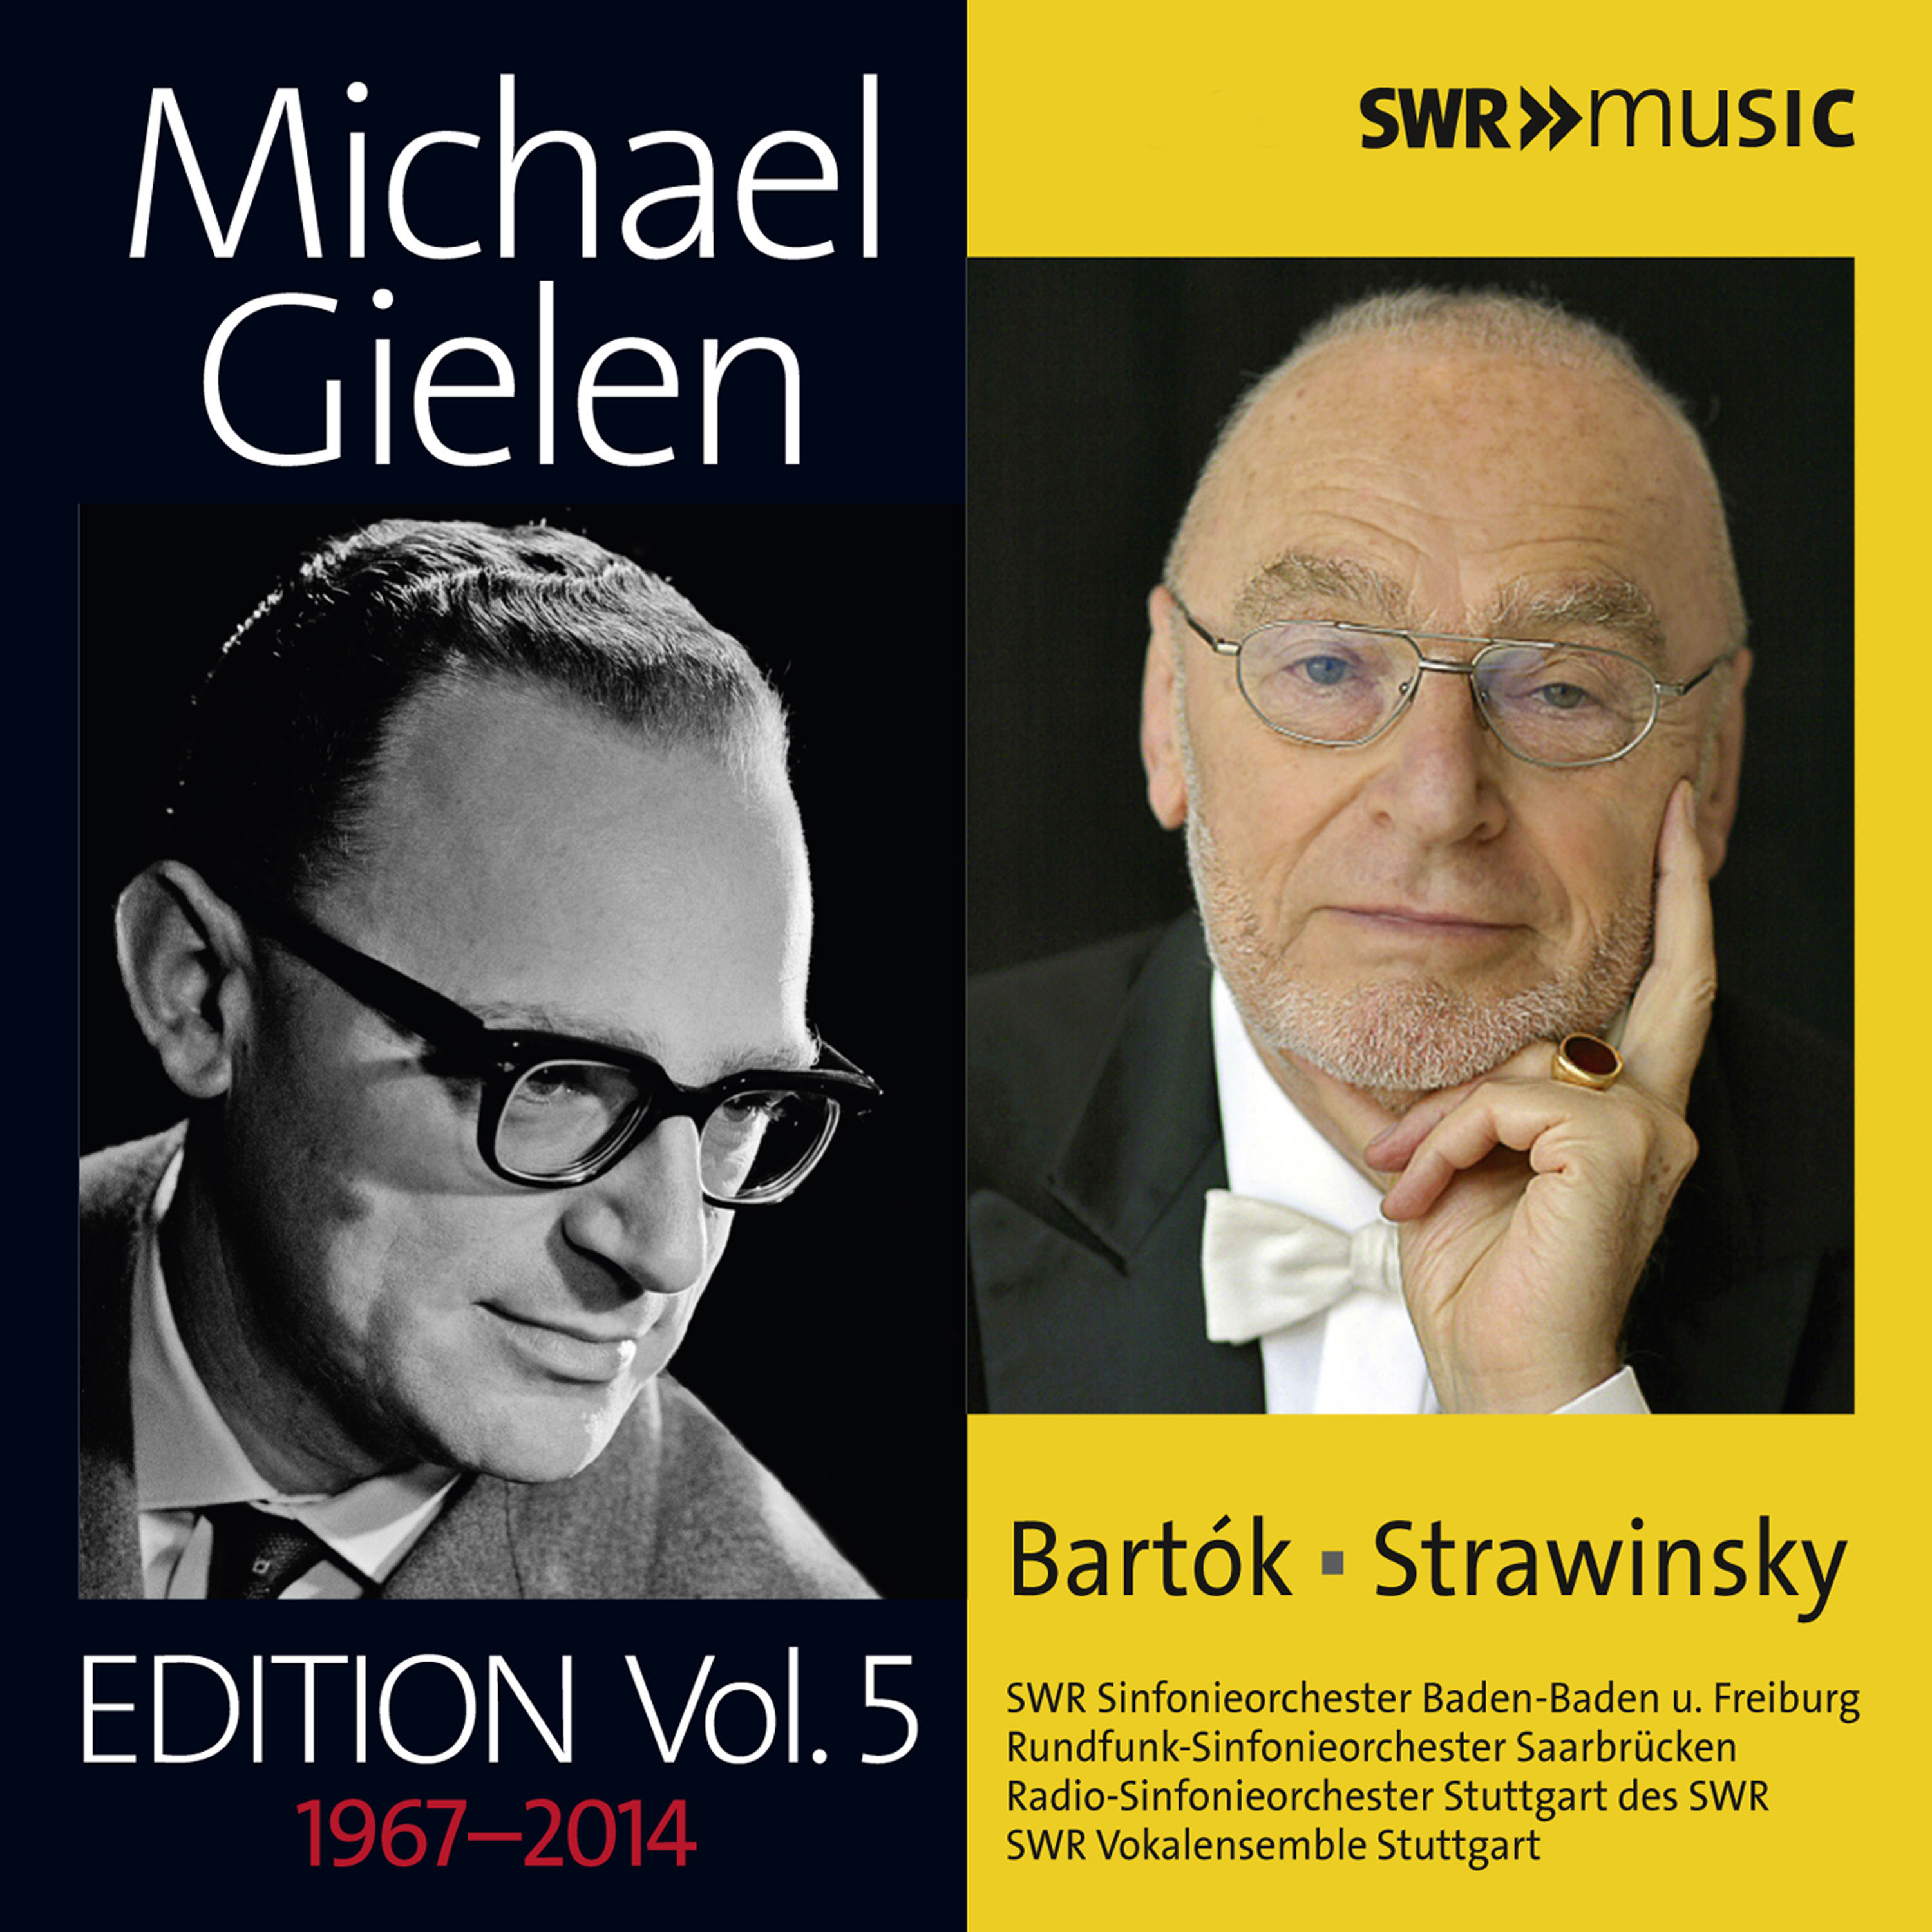 SWR Sinfonieorchester - Michael Gielen Edition Vol. 5 cd02 Bartok Strawinsky